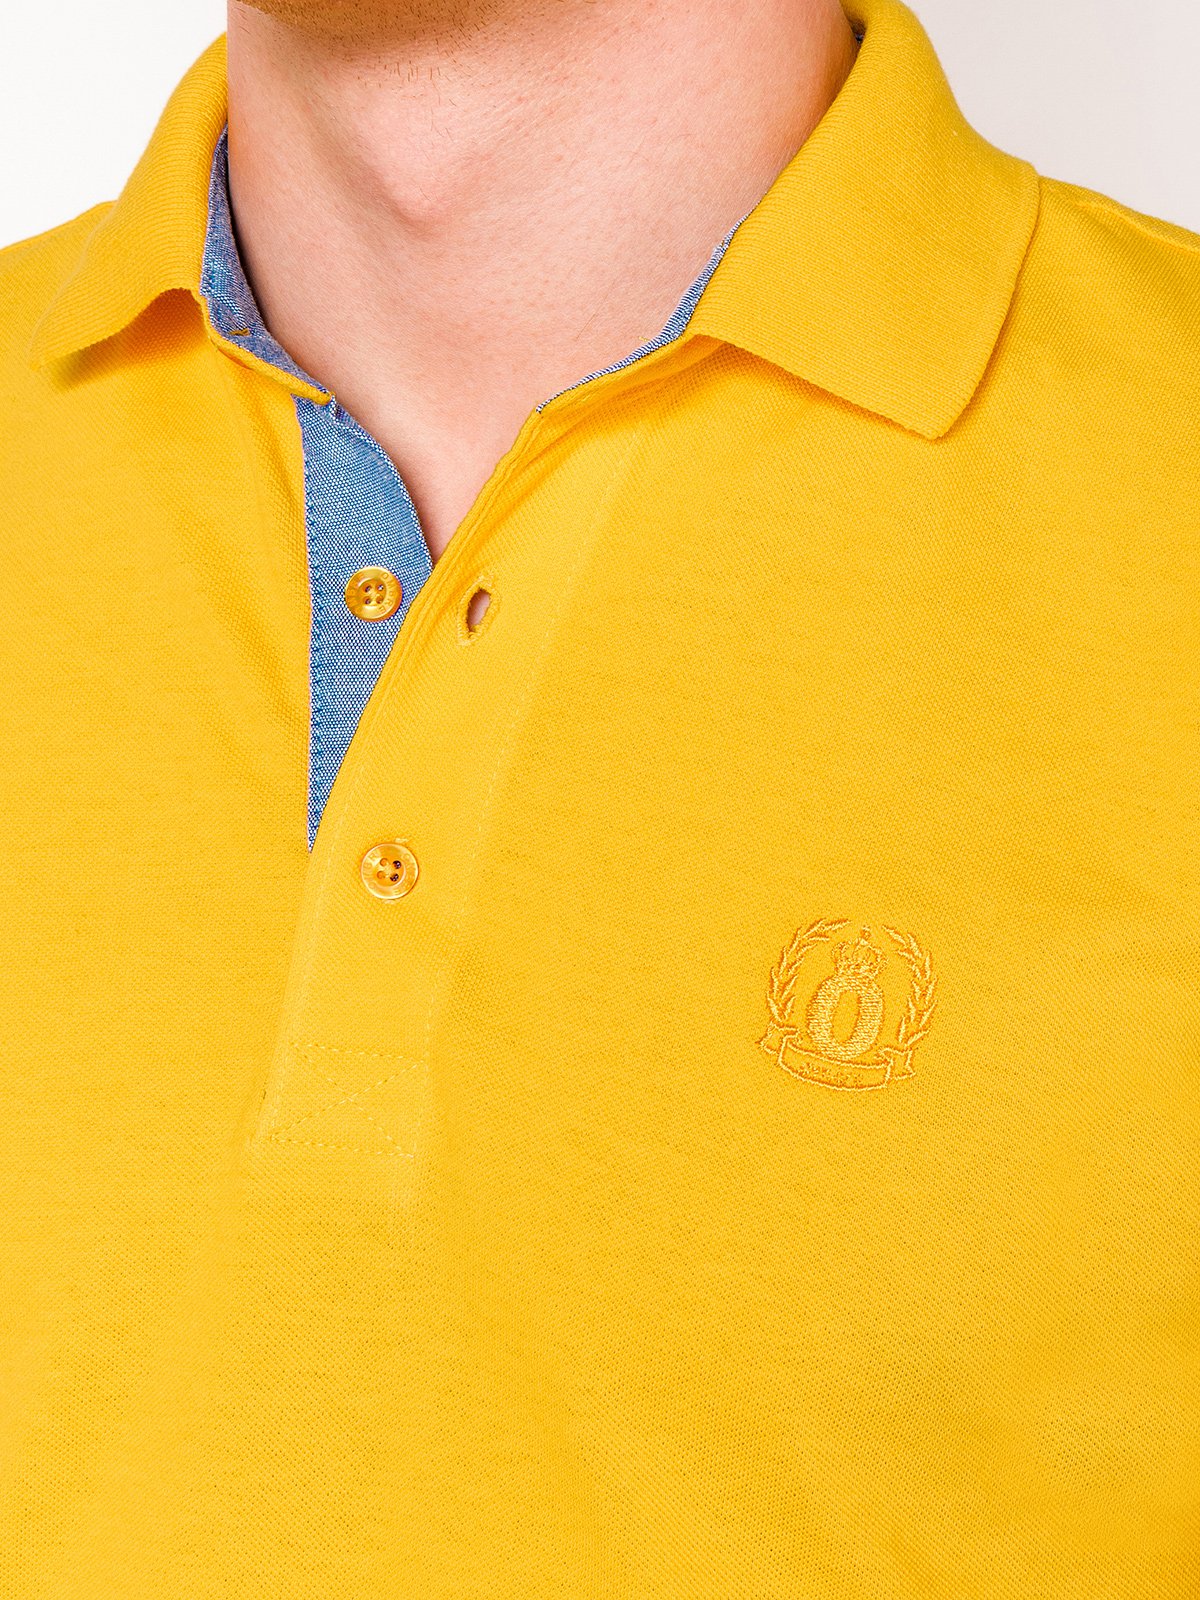 Men's plain polo shirt S837 - yellow | MODONE wholesale - Clothing For Men